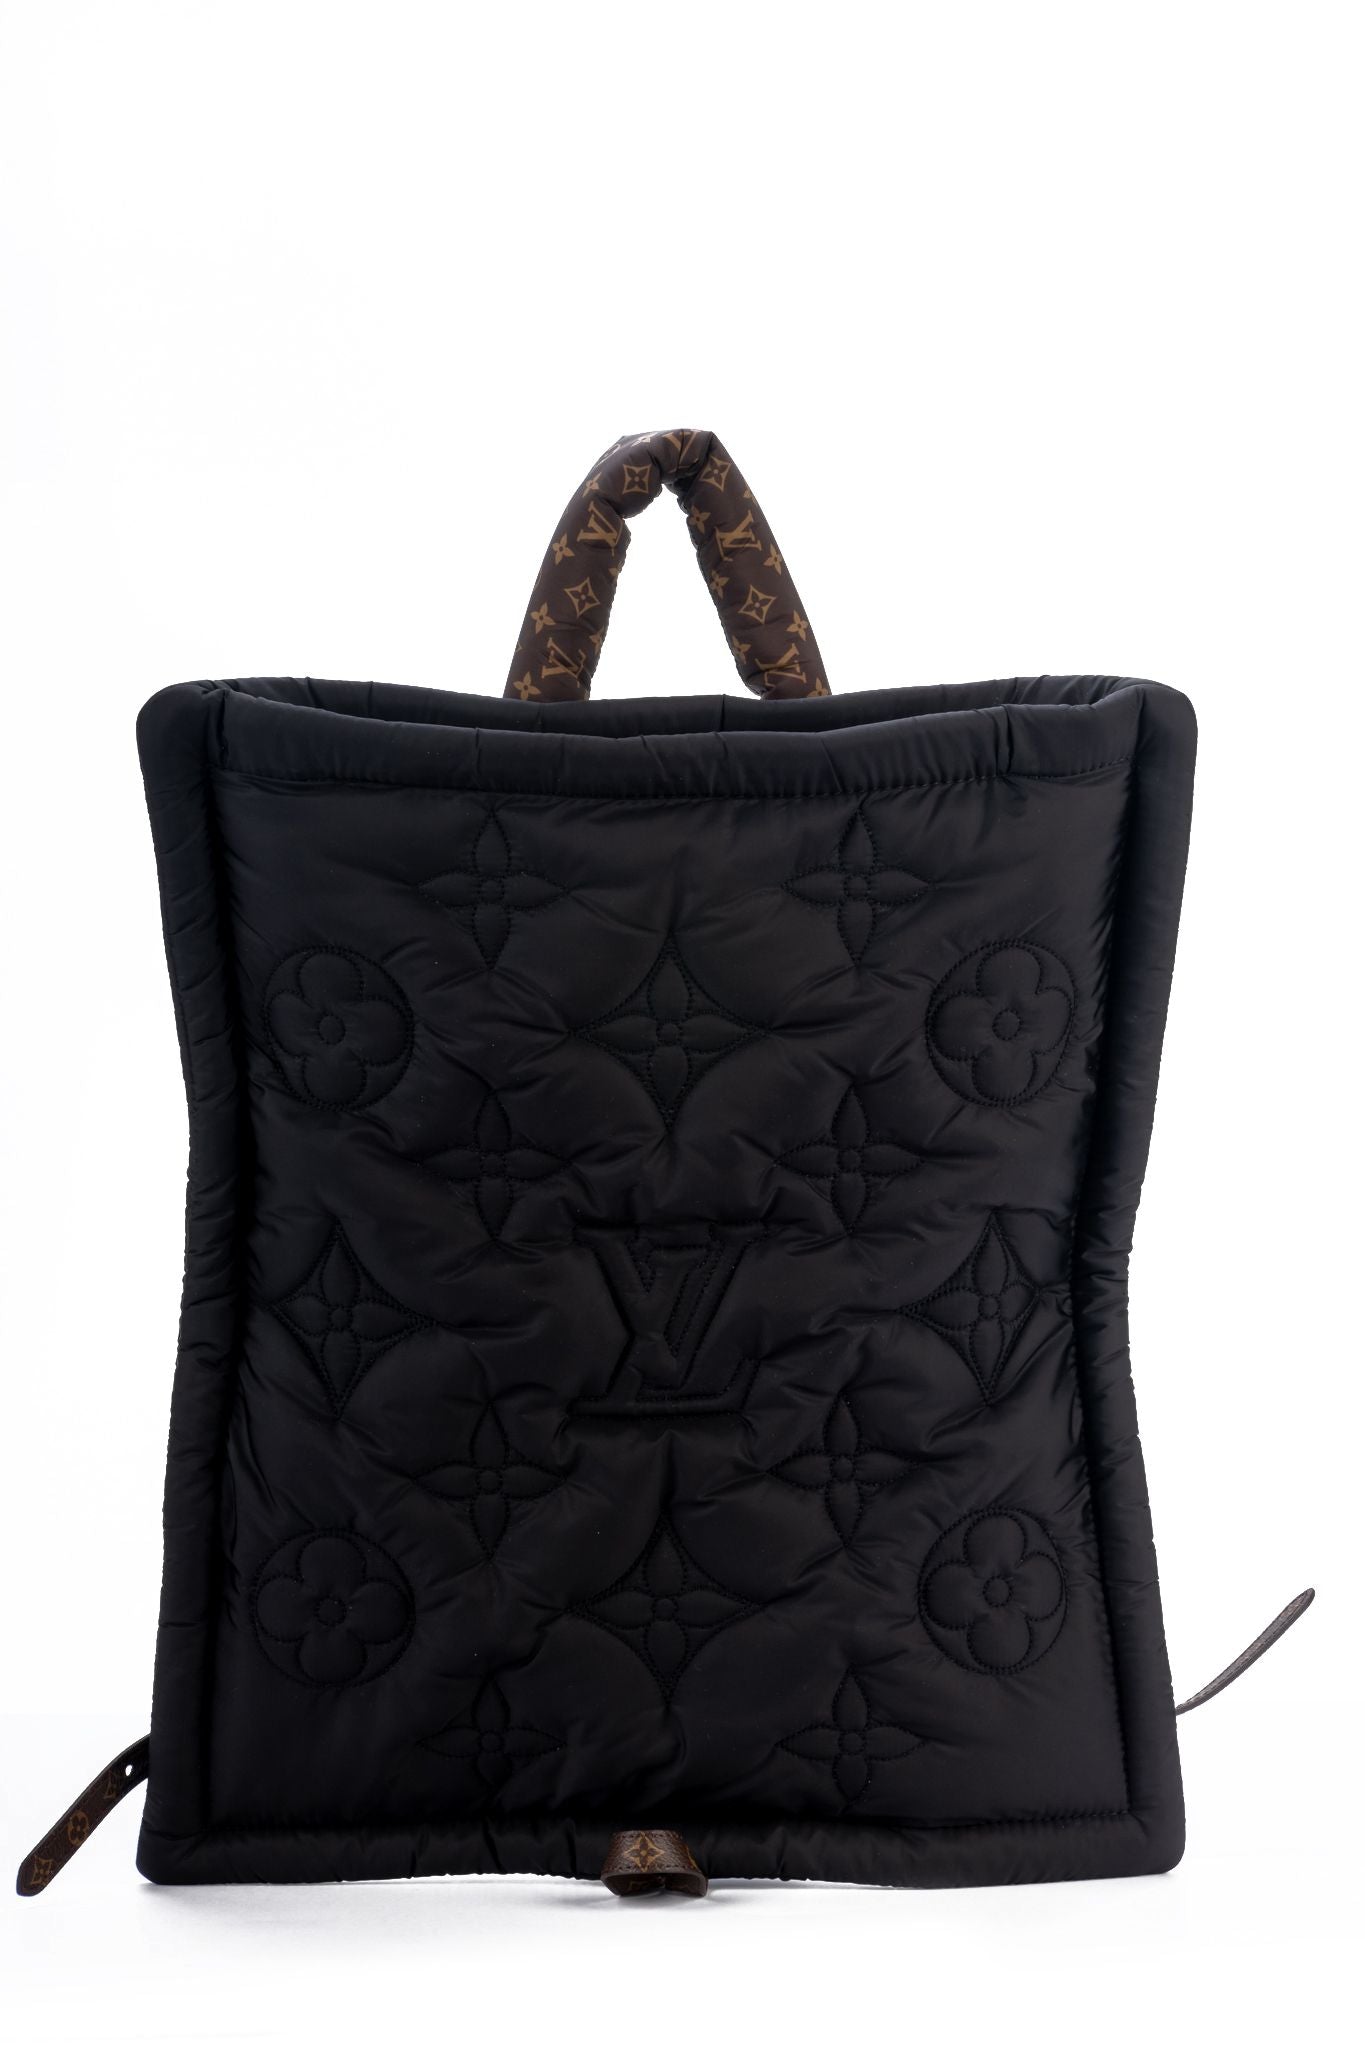 monogram backpack black